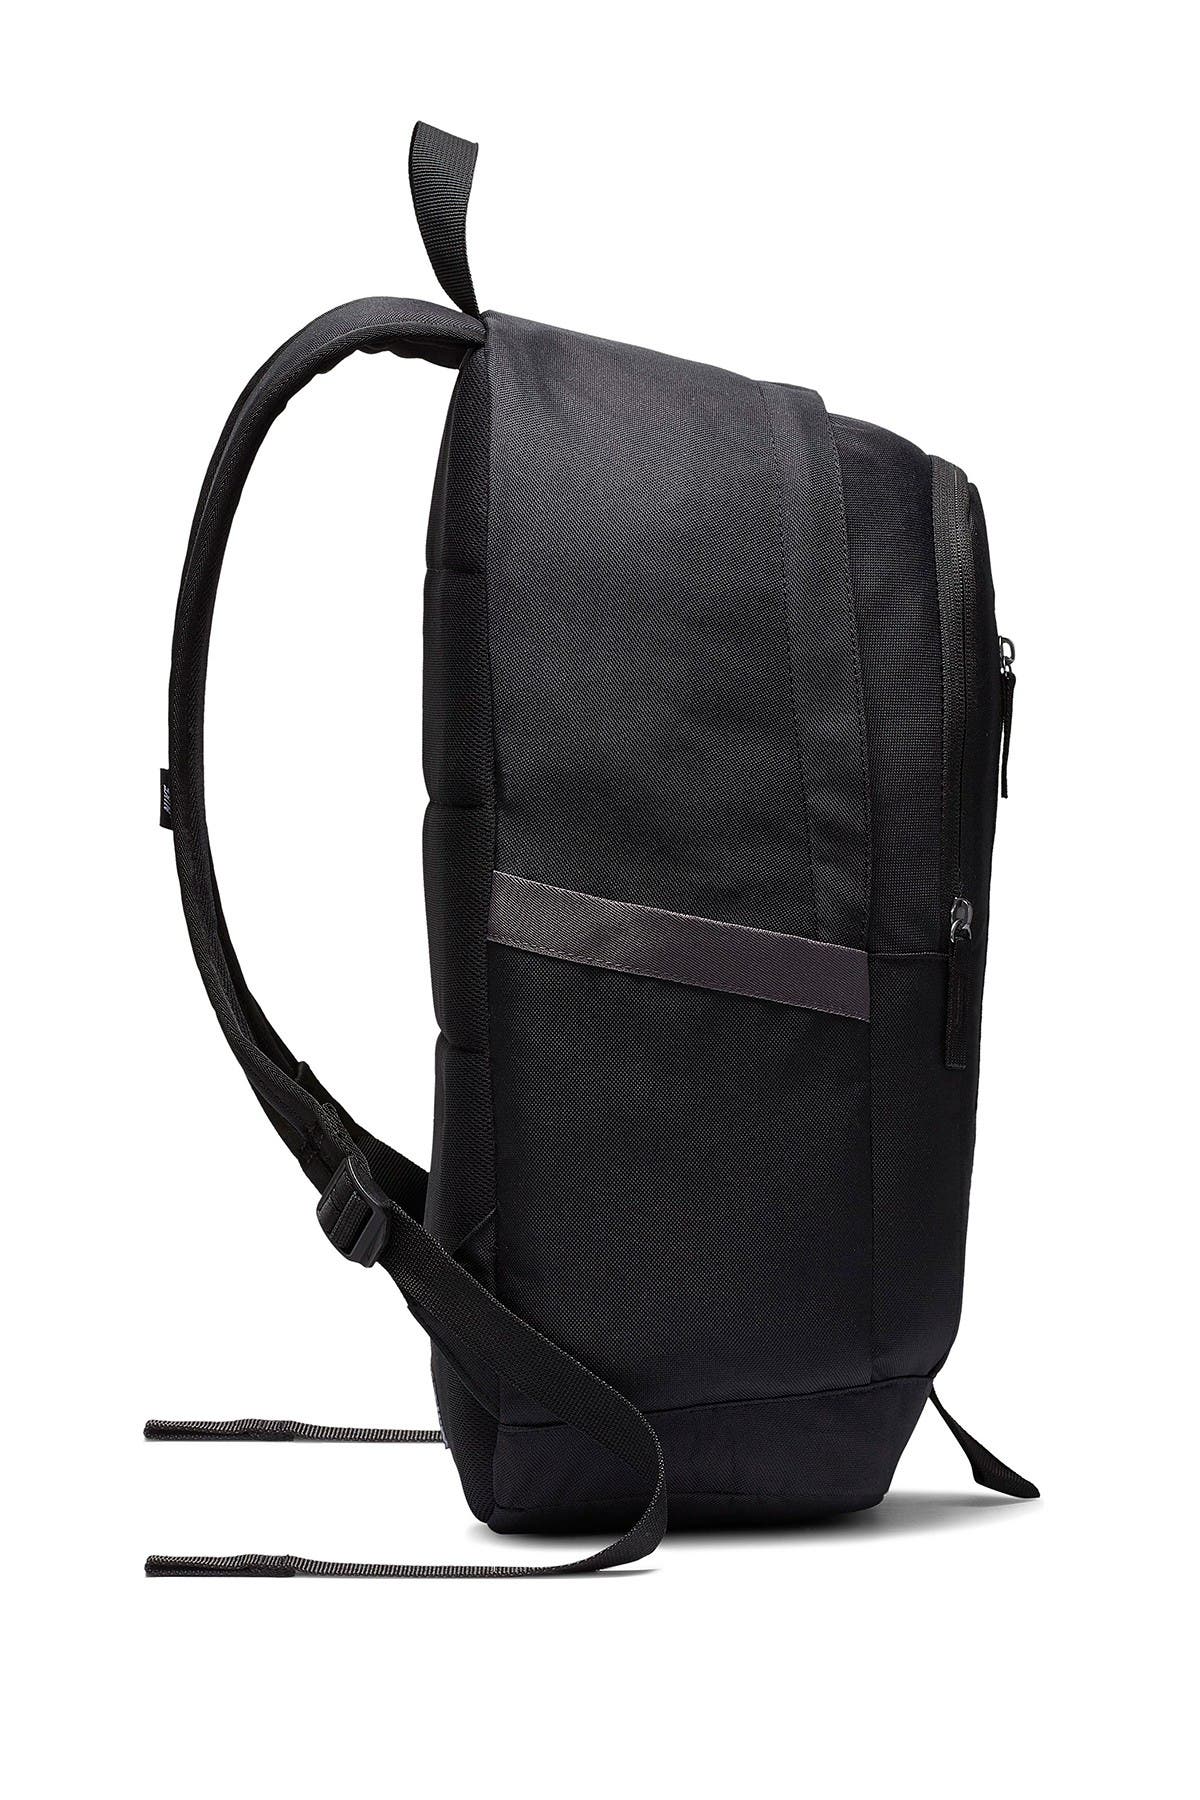 nike soleday backpack black